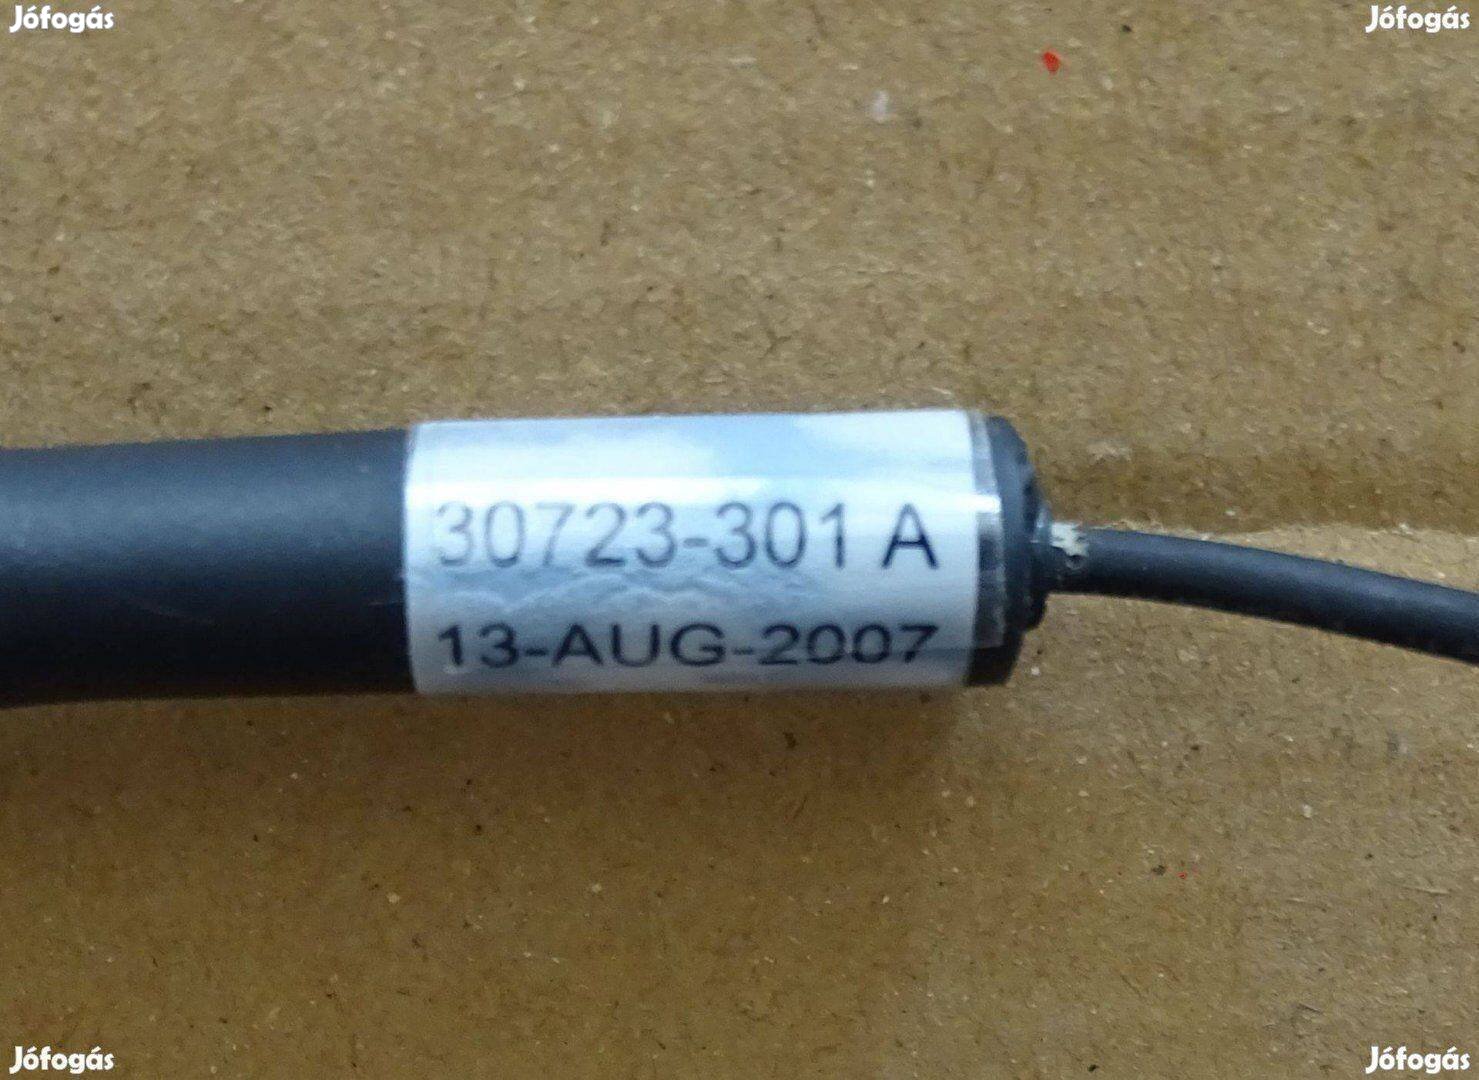 Zebra 30723-301 kábeldióda 600V fojtótekercs 100Uh